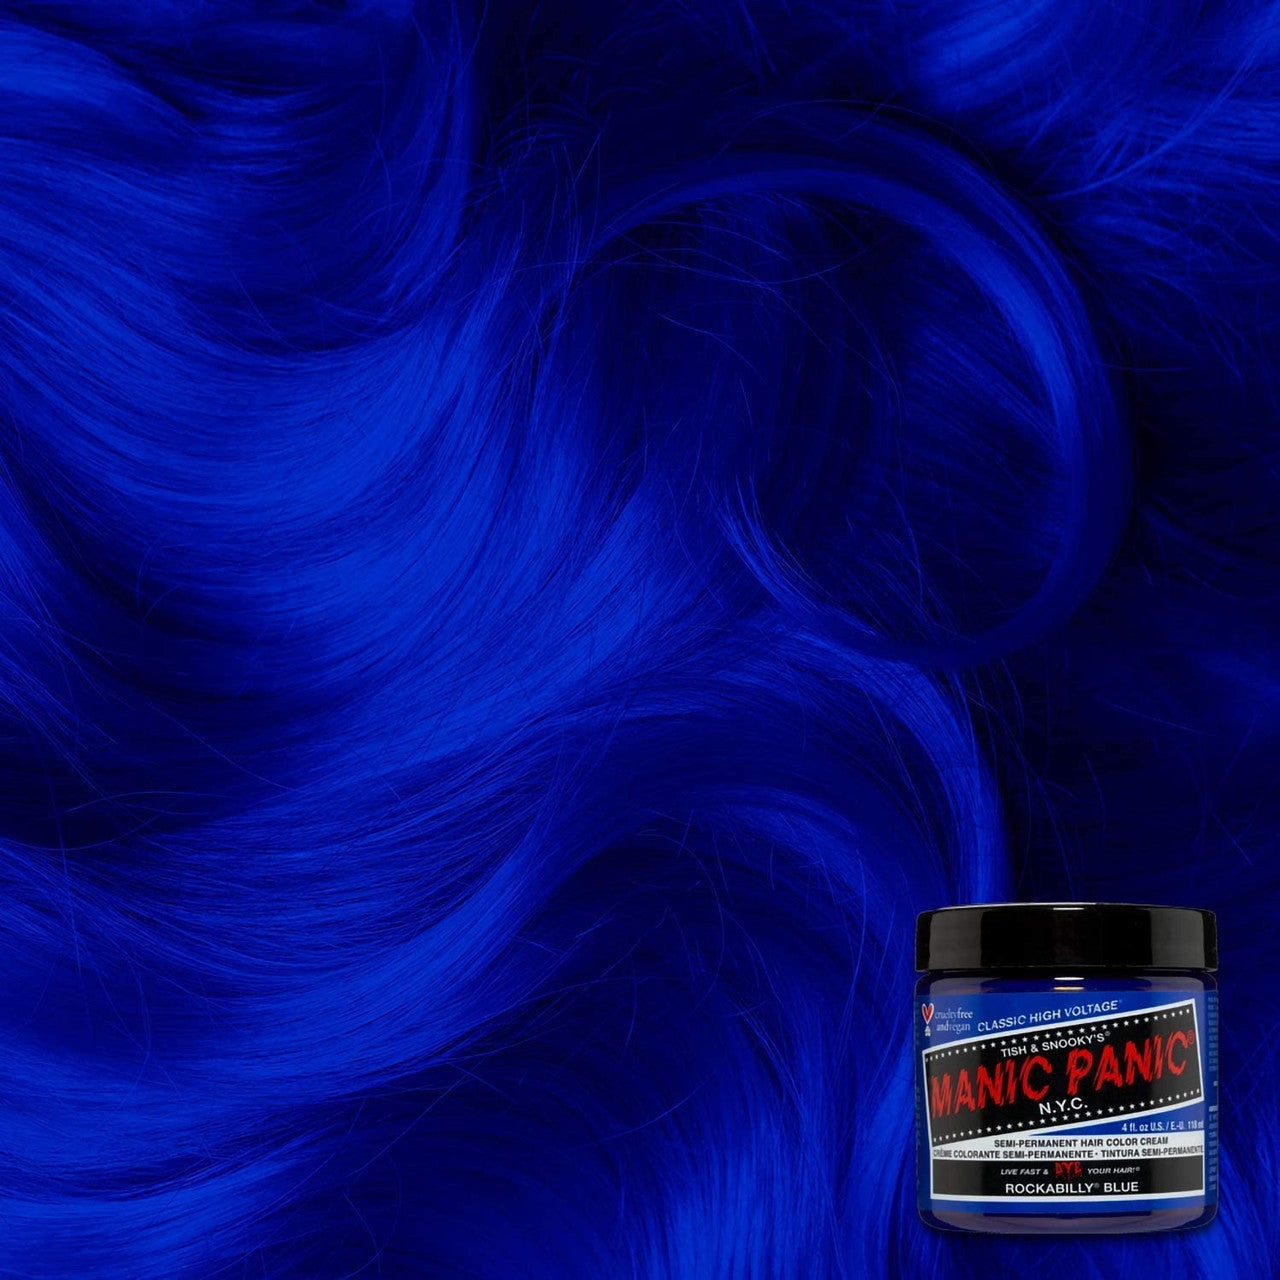 Manic Panic High Voltage Classic Semi-Permanent Hair Colour 118ml Various Colours